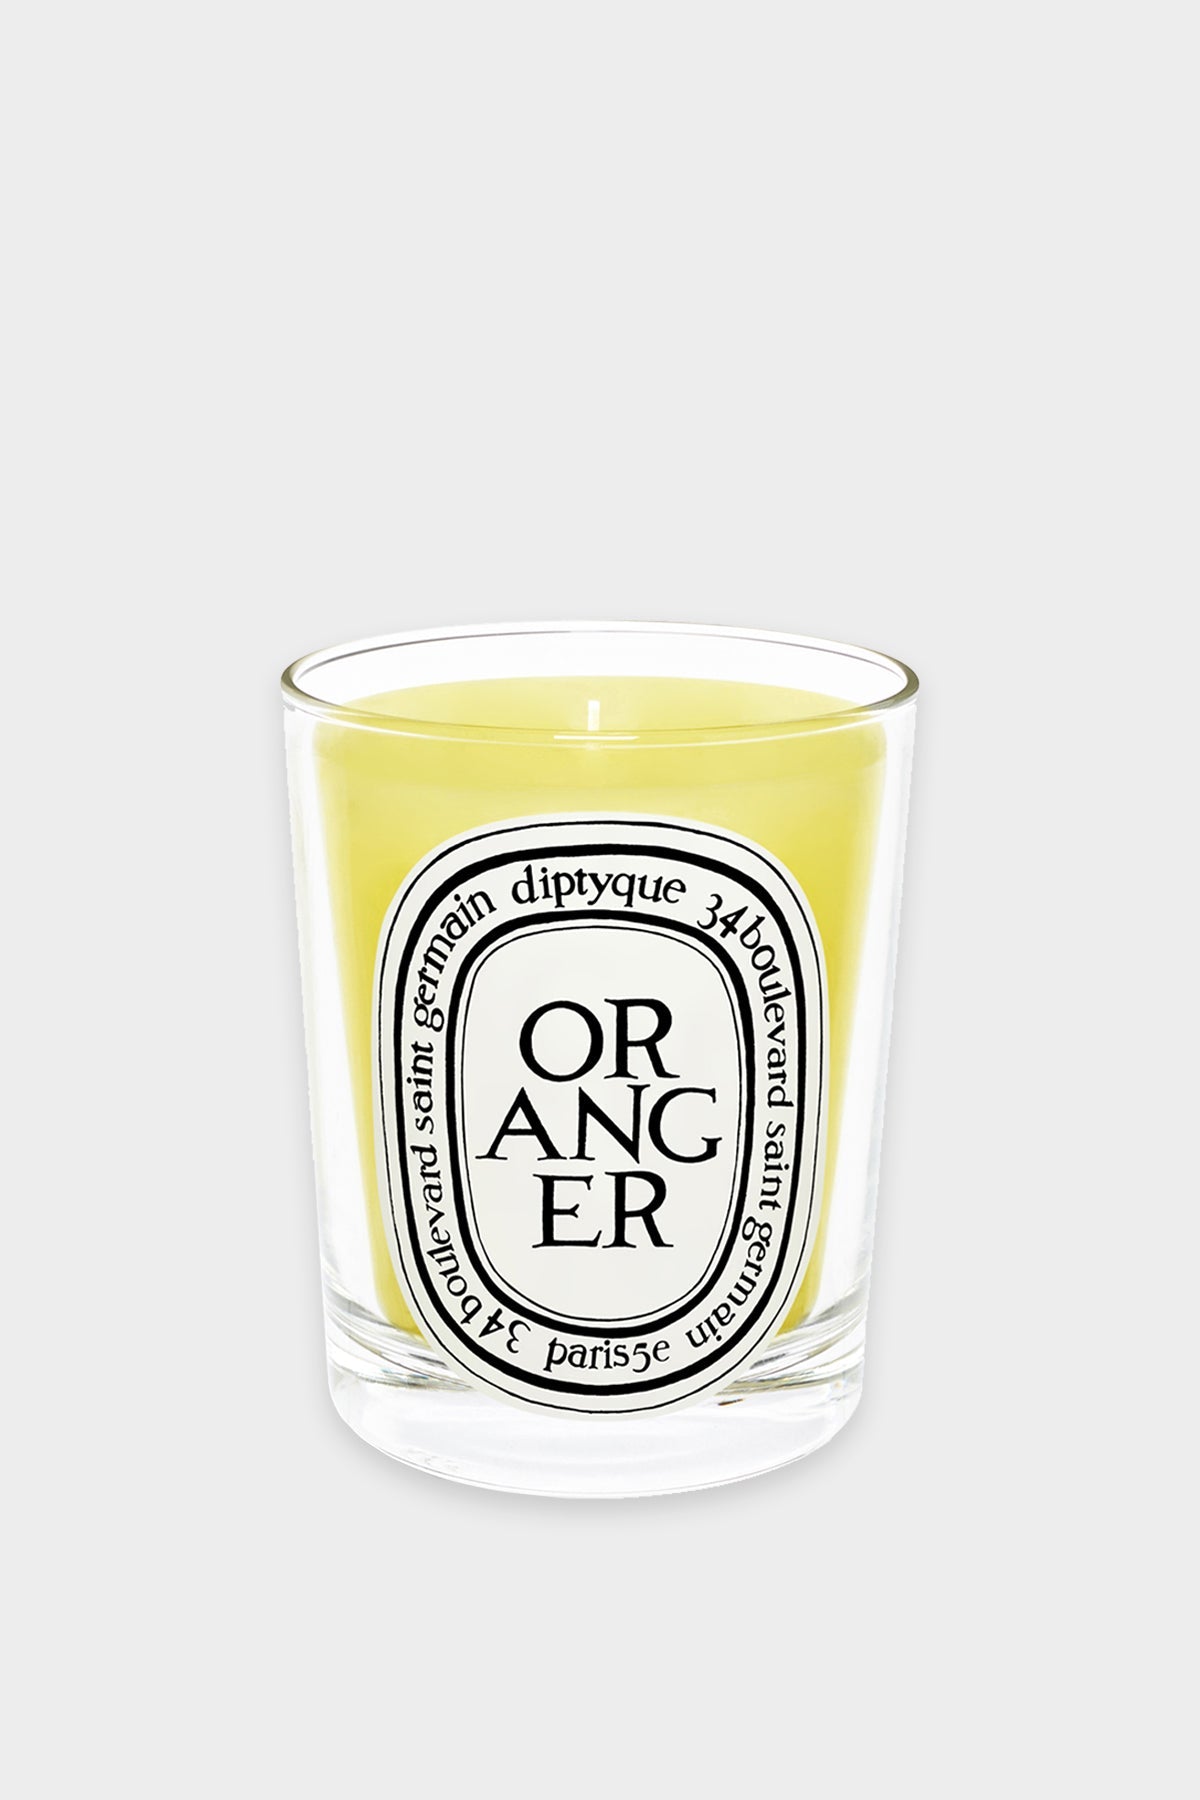 Oranger Candle Medium - shop-olivia.com